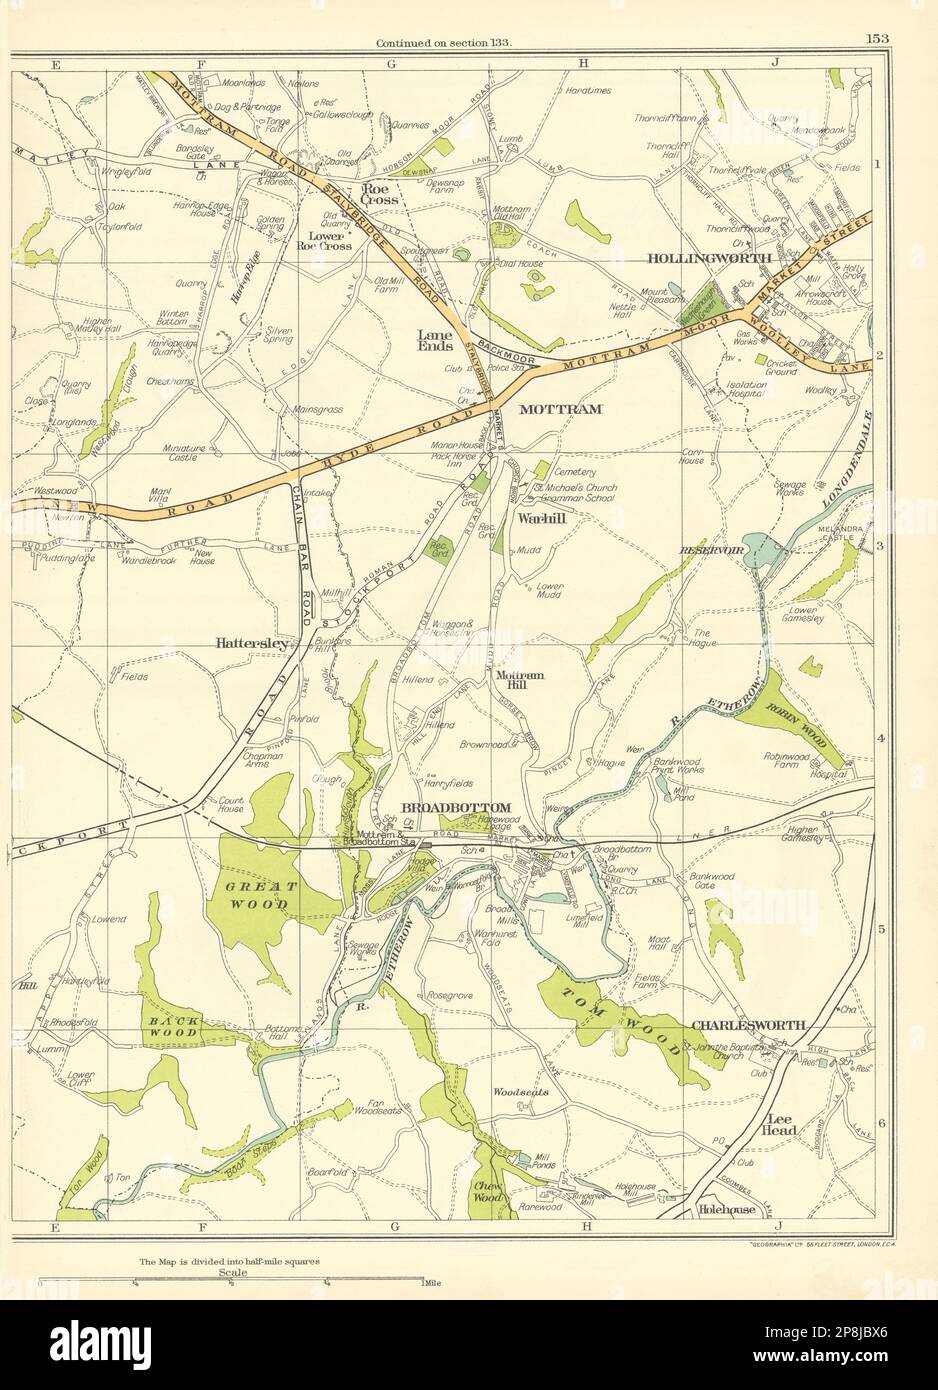 CHESHIRE Gt Wood Broadbottom Mottram Warhill Hollingworth Charlesworth 1935 map Stock Photo